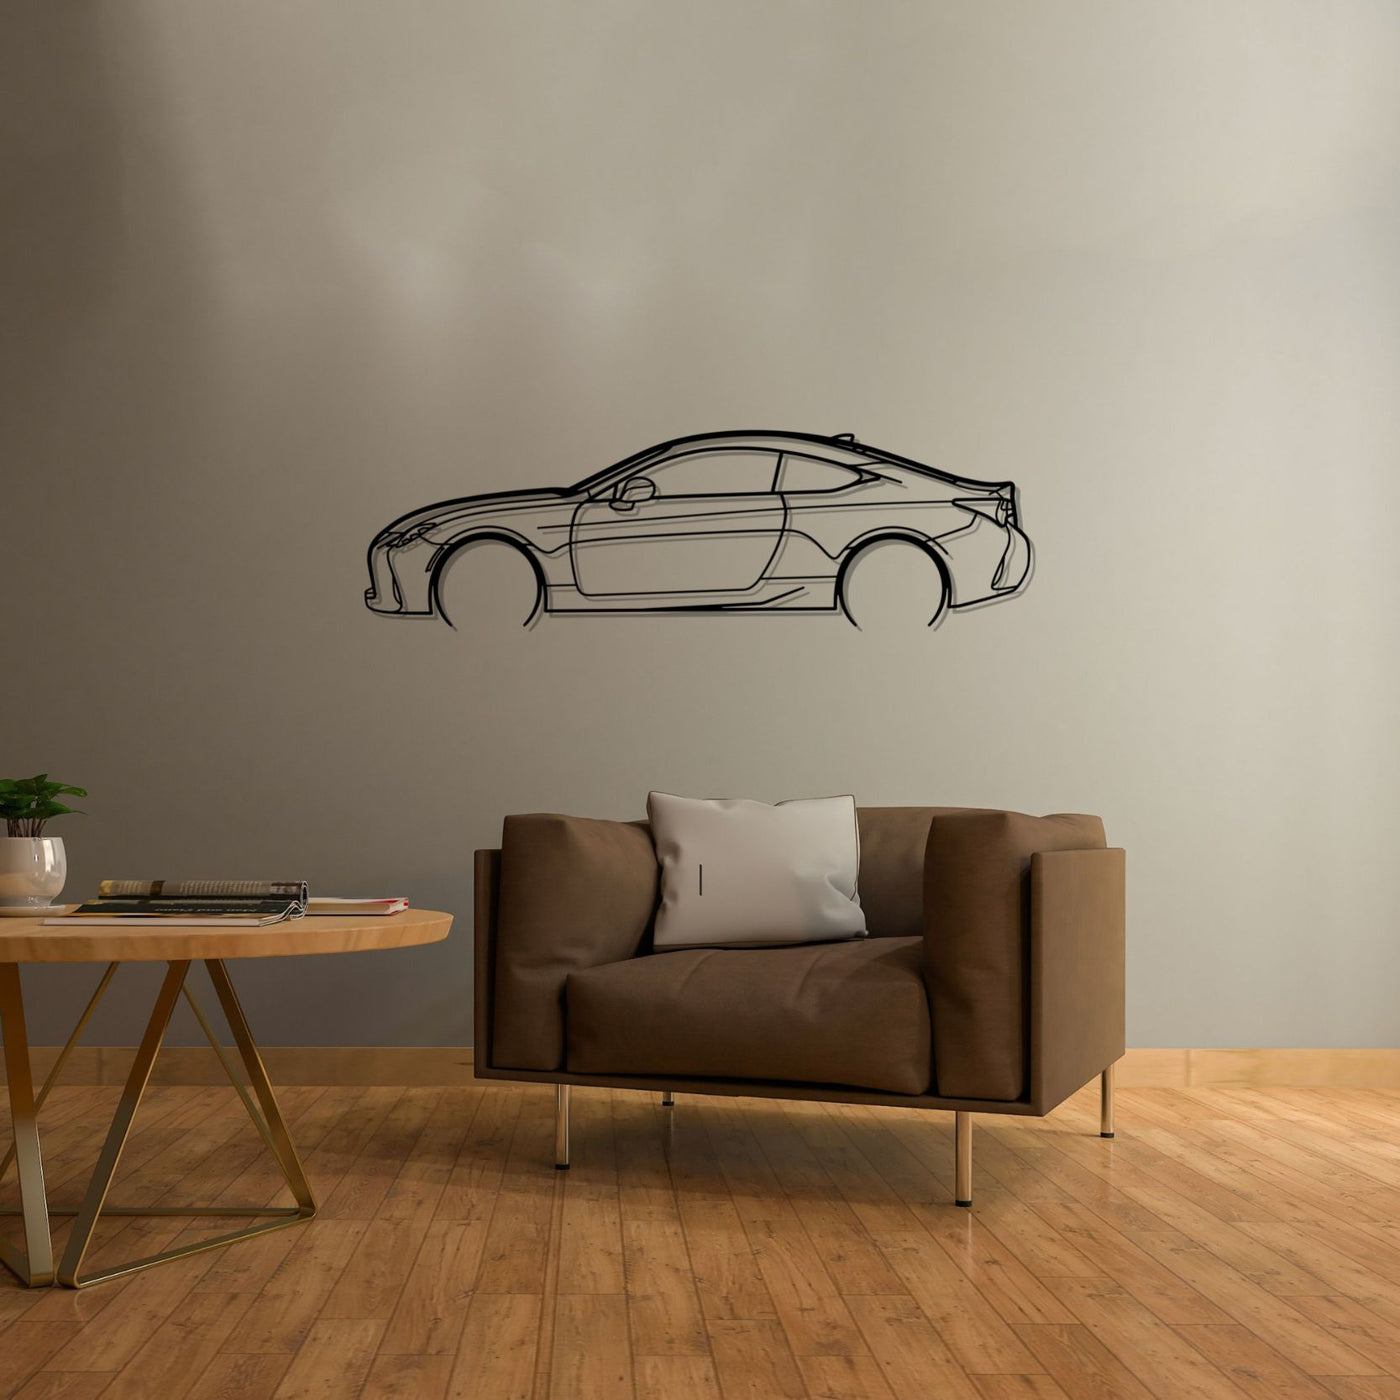 RC 350 F-Sport Detailed Silhouette Metal Wall Art